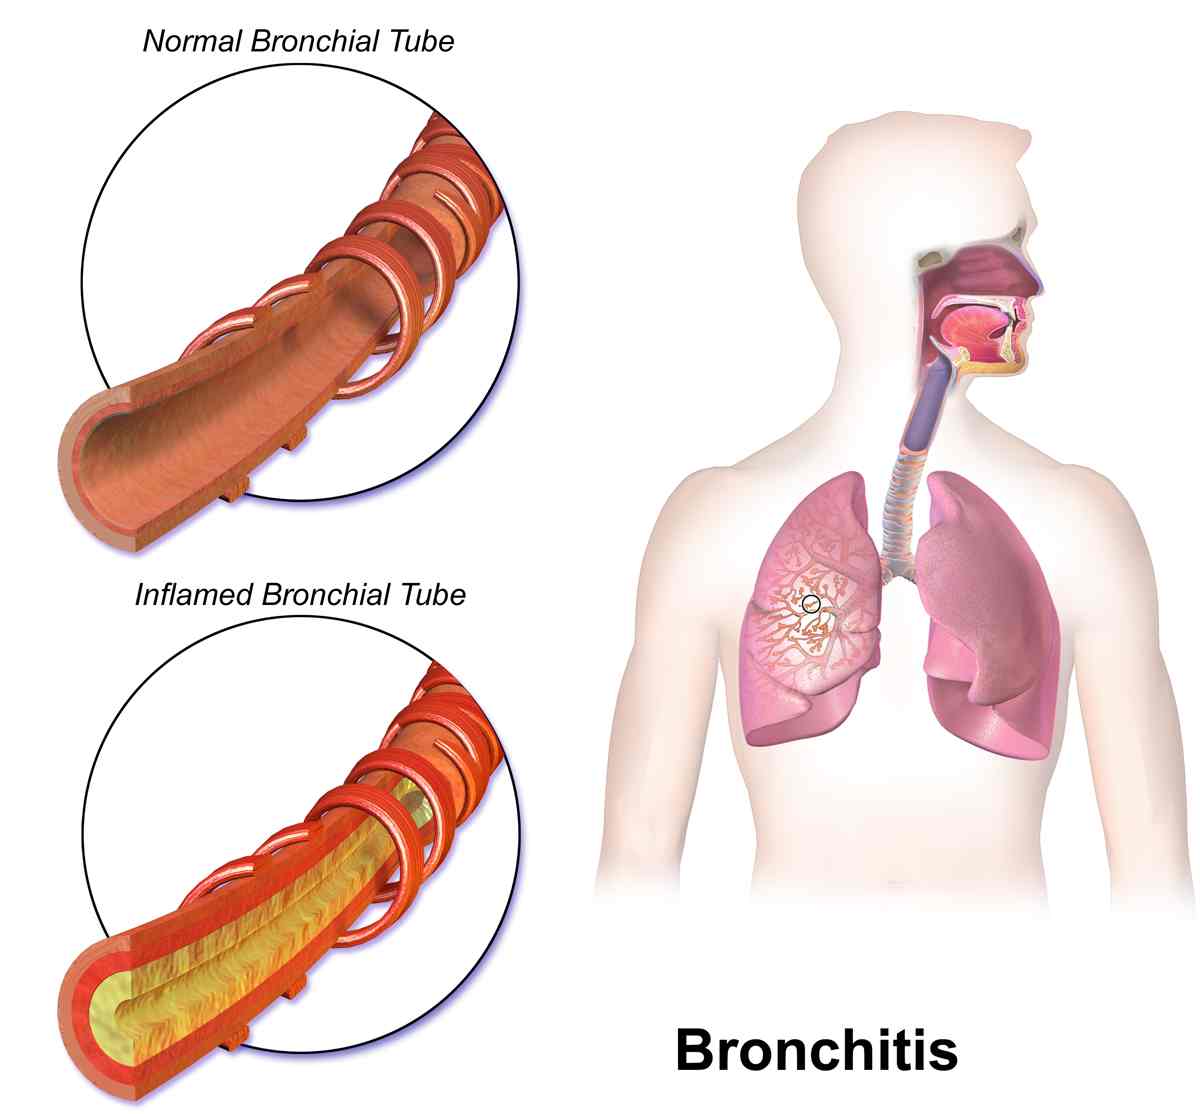 Treatment of Allergic Bronchitis